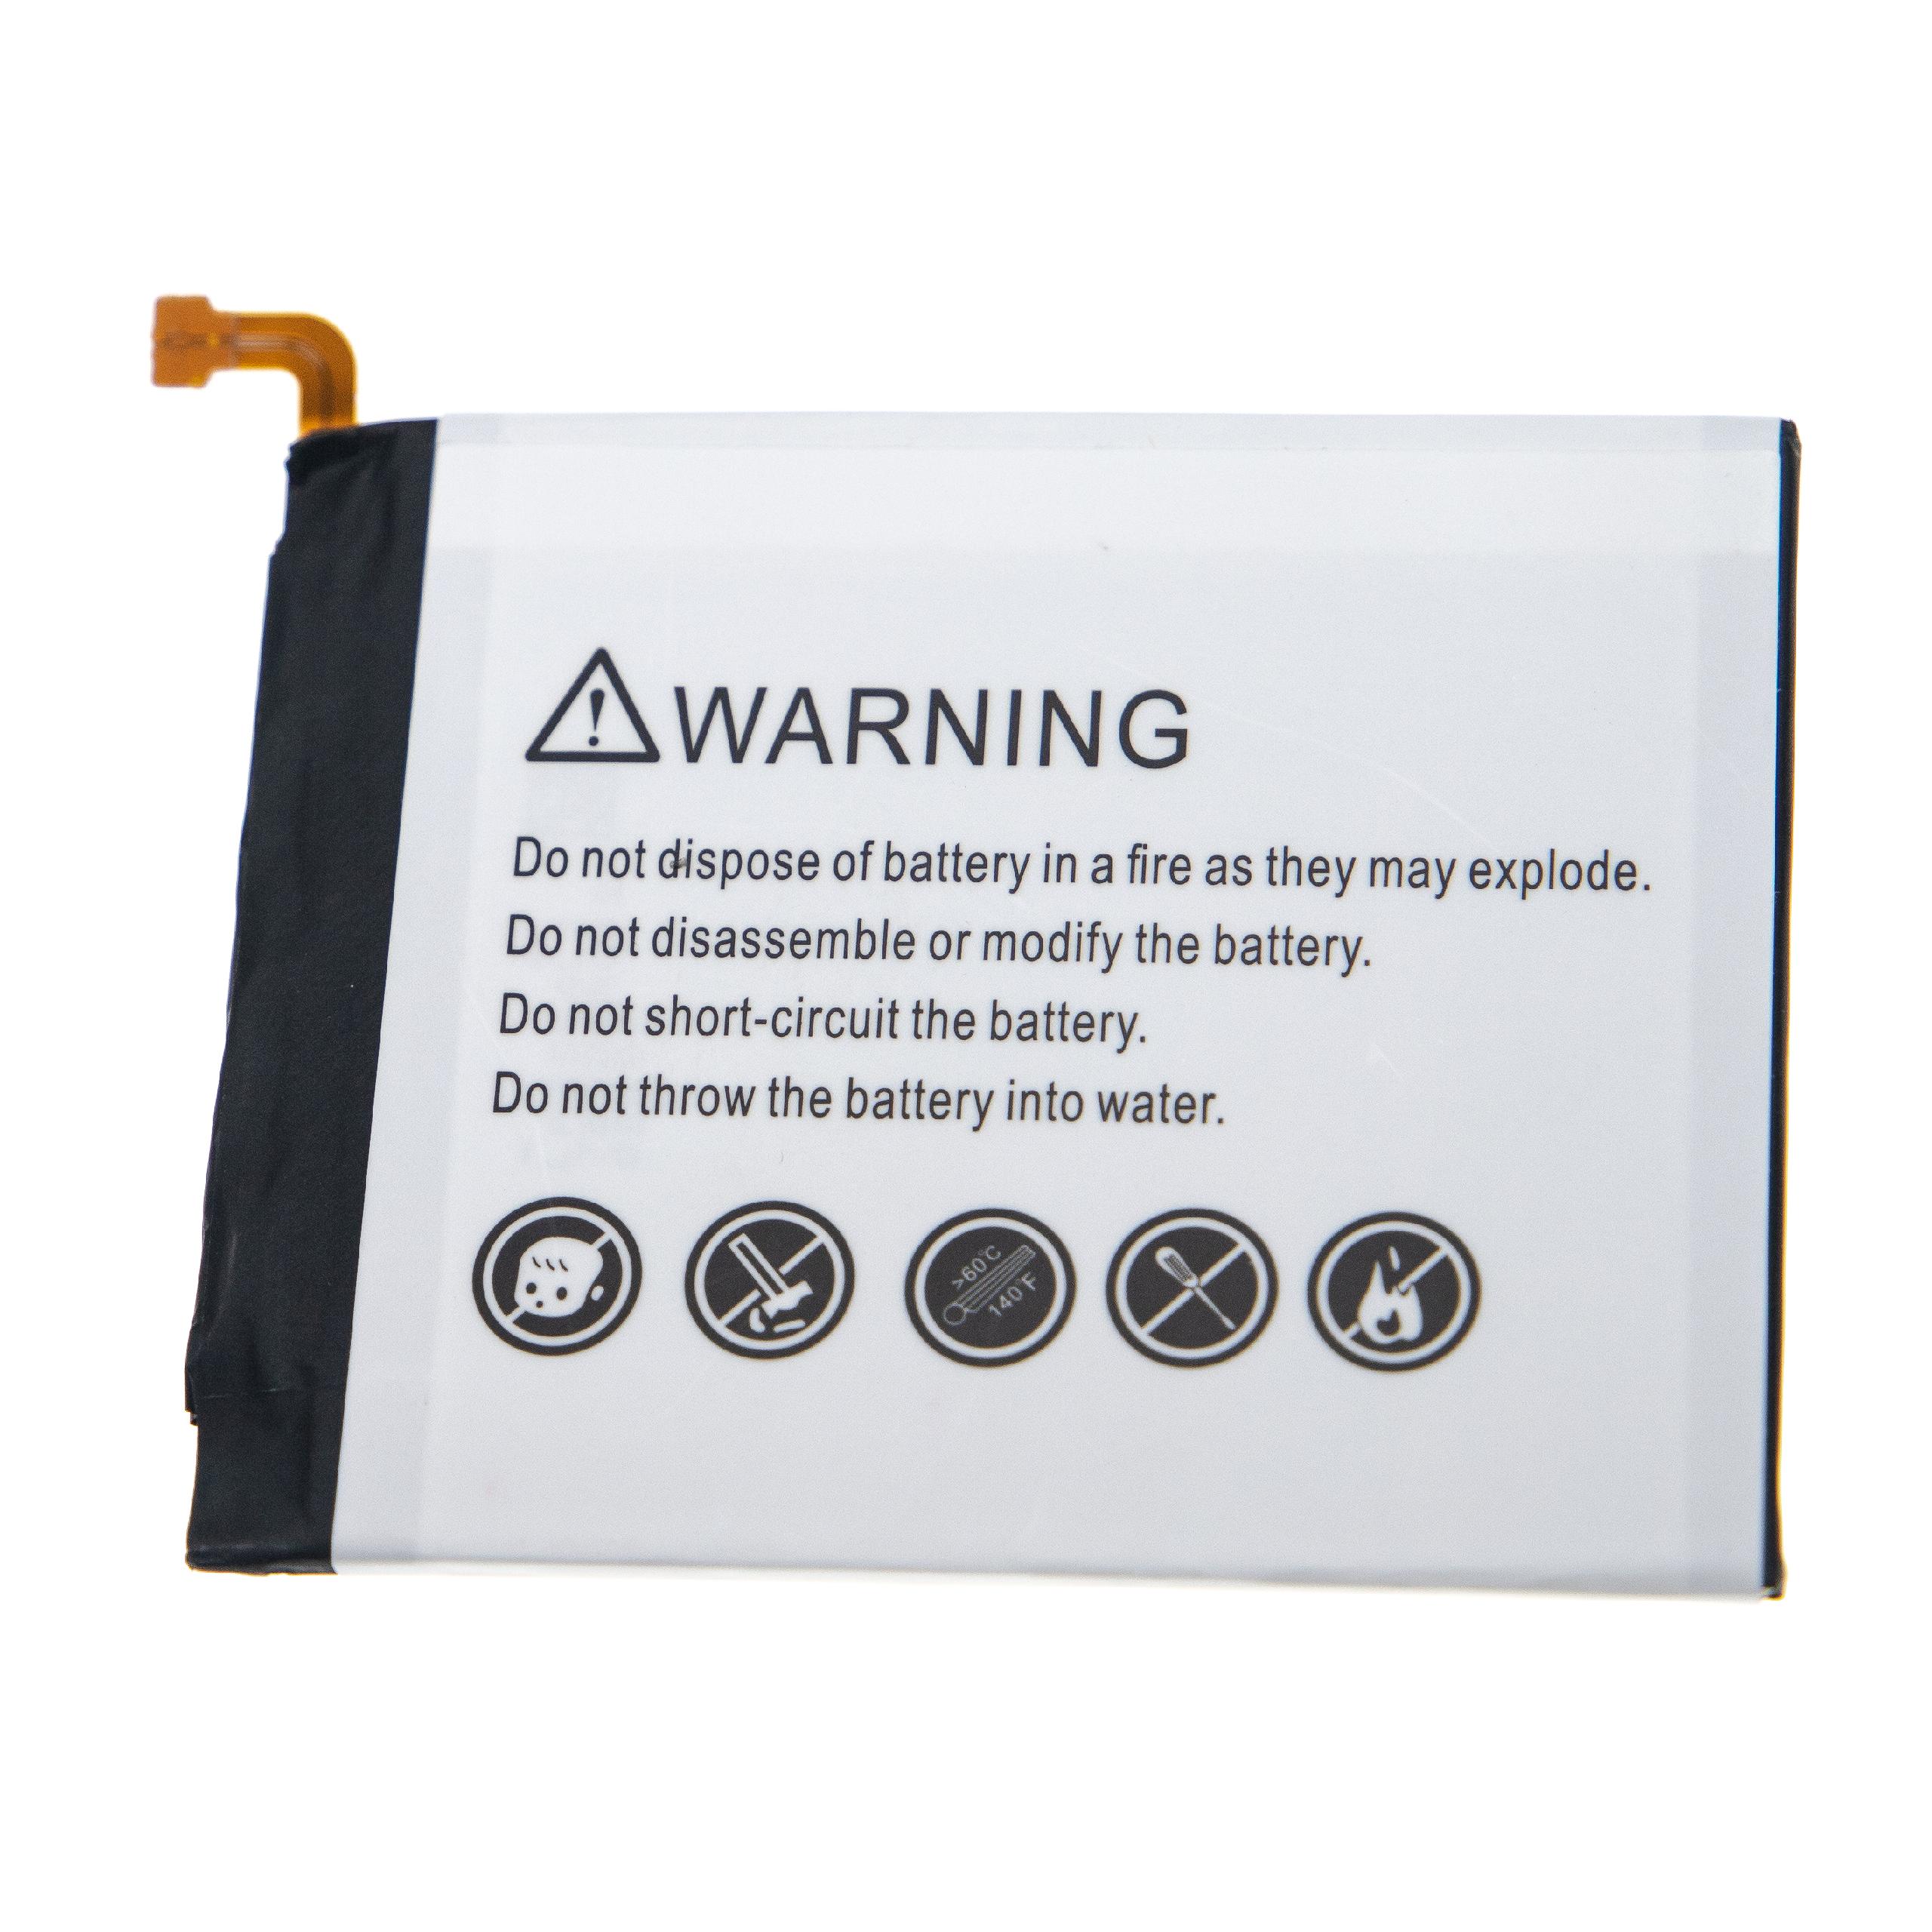 Batterie remplace Samsung GH82-19746A, EB-BA705ABU pour téléphone portable - 3000mAh, 4,4V, Li-polymère